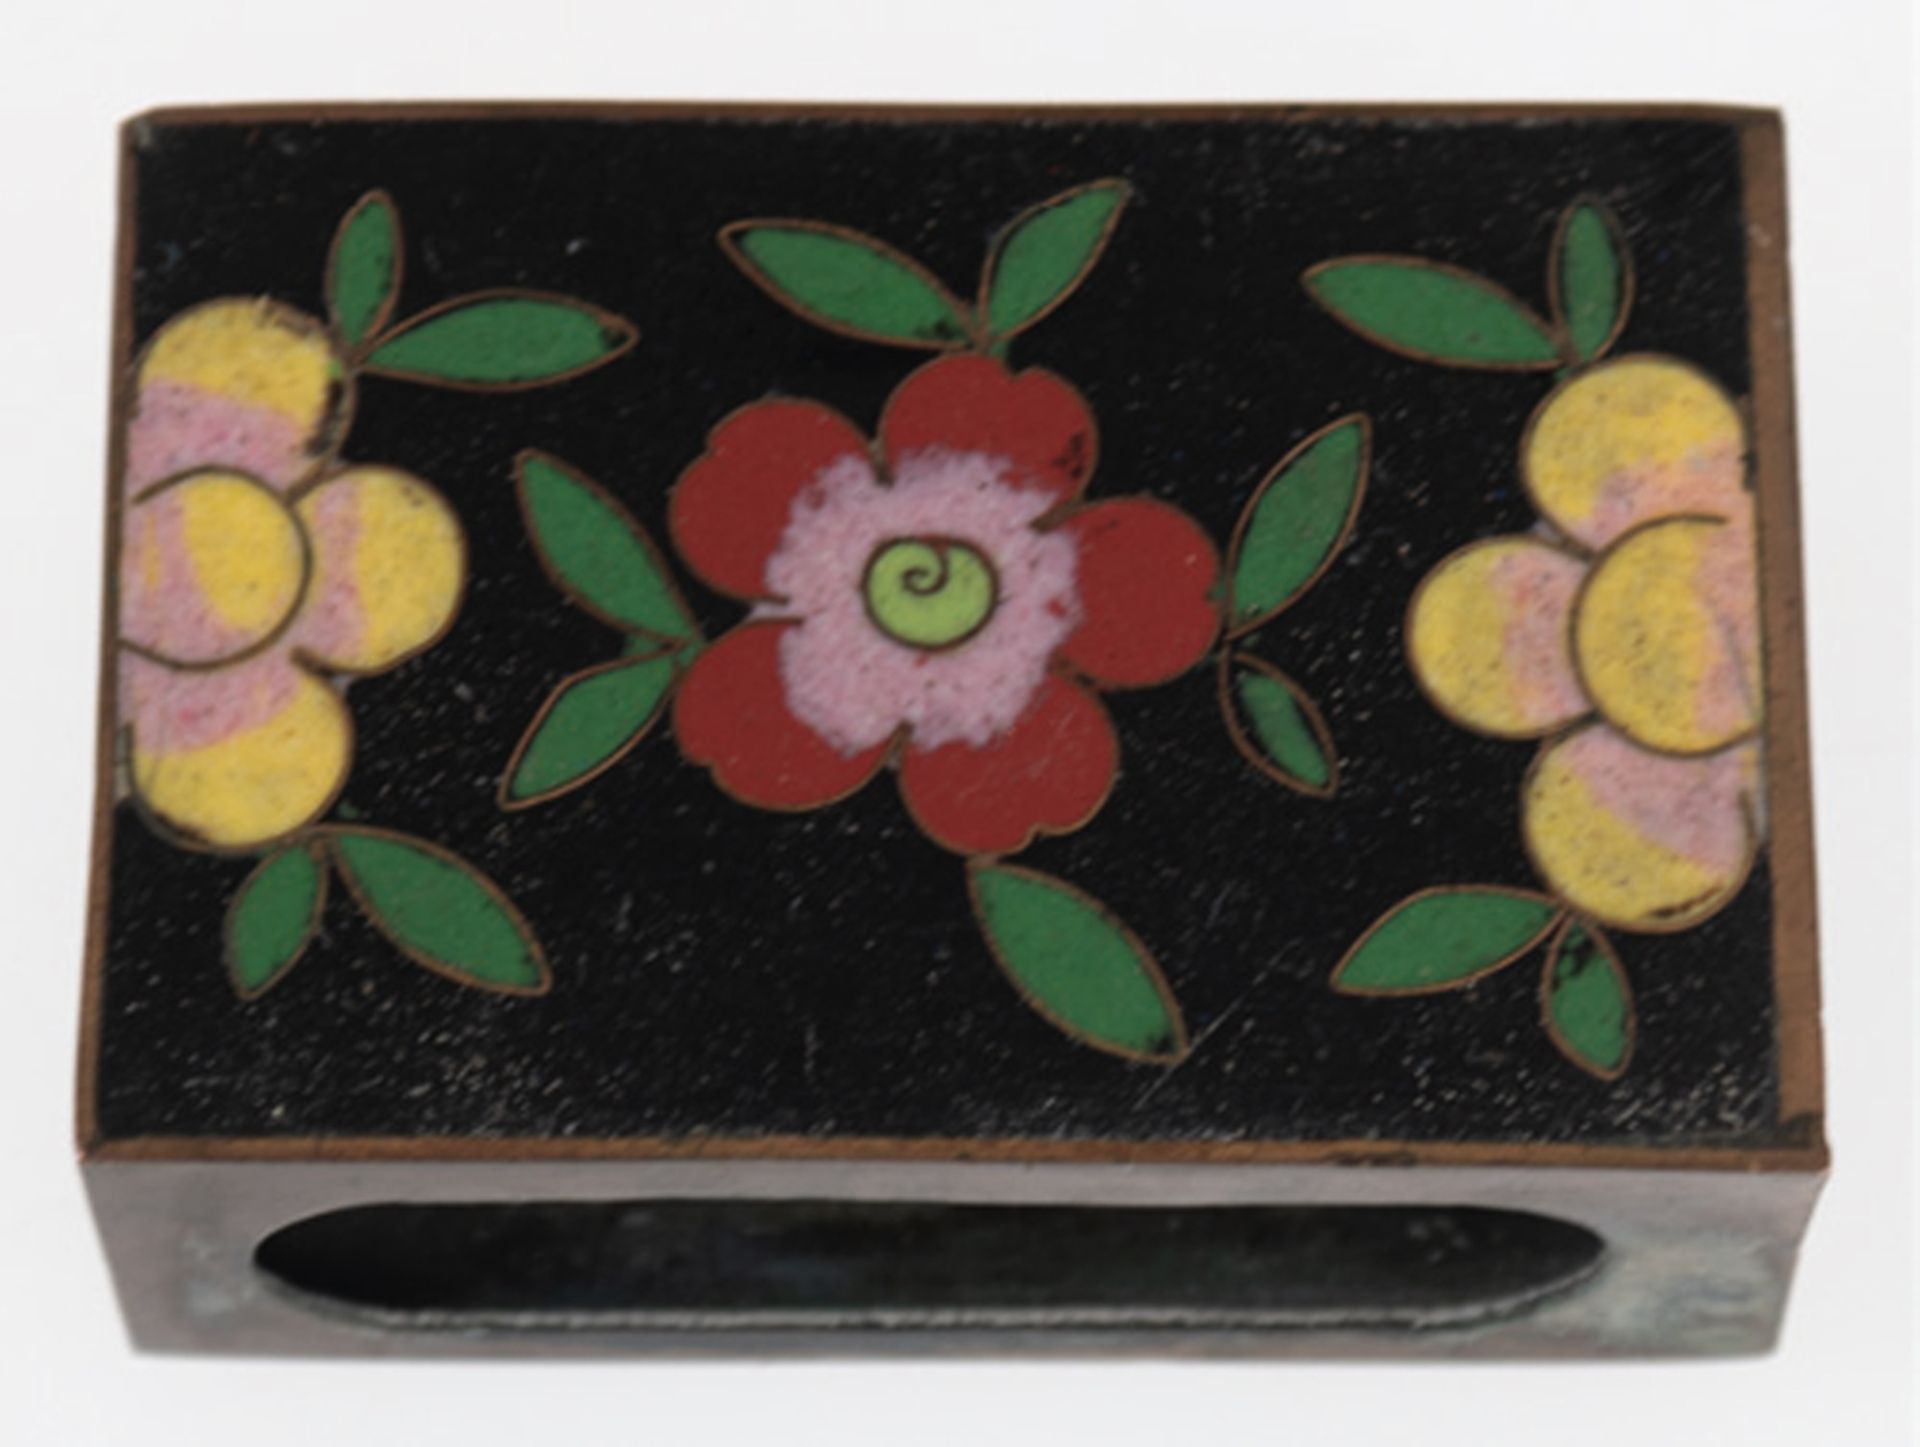 Streichholzschachtelhalter, Cloisonné, China Anfang 20. Jh., Drachen- bzw. Blumendekor auf schwarze